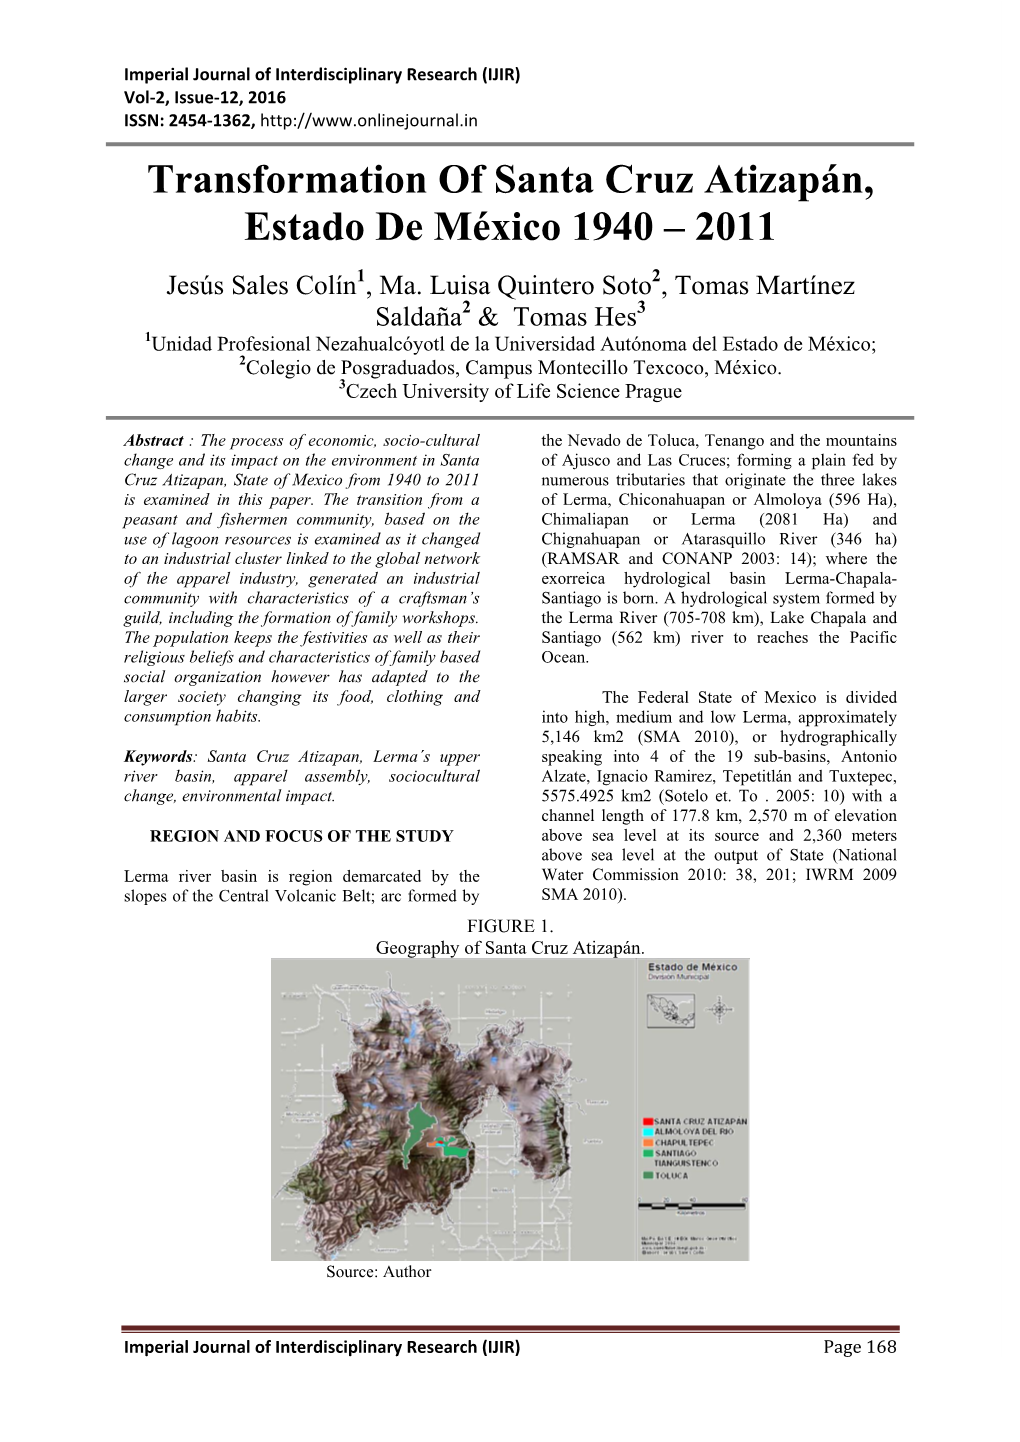 Transformation of Santa Cruz Atizapán, Estado De México 1940 – 2011